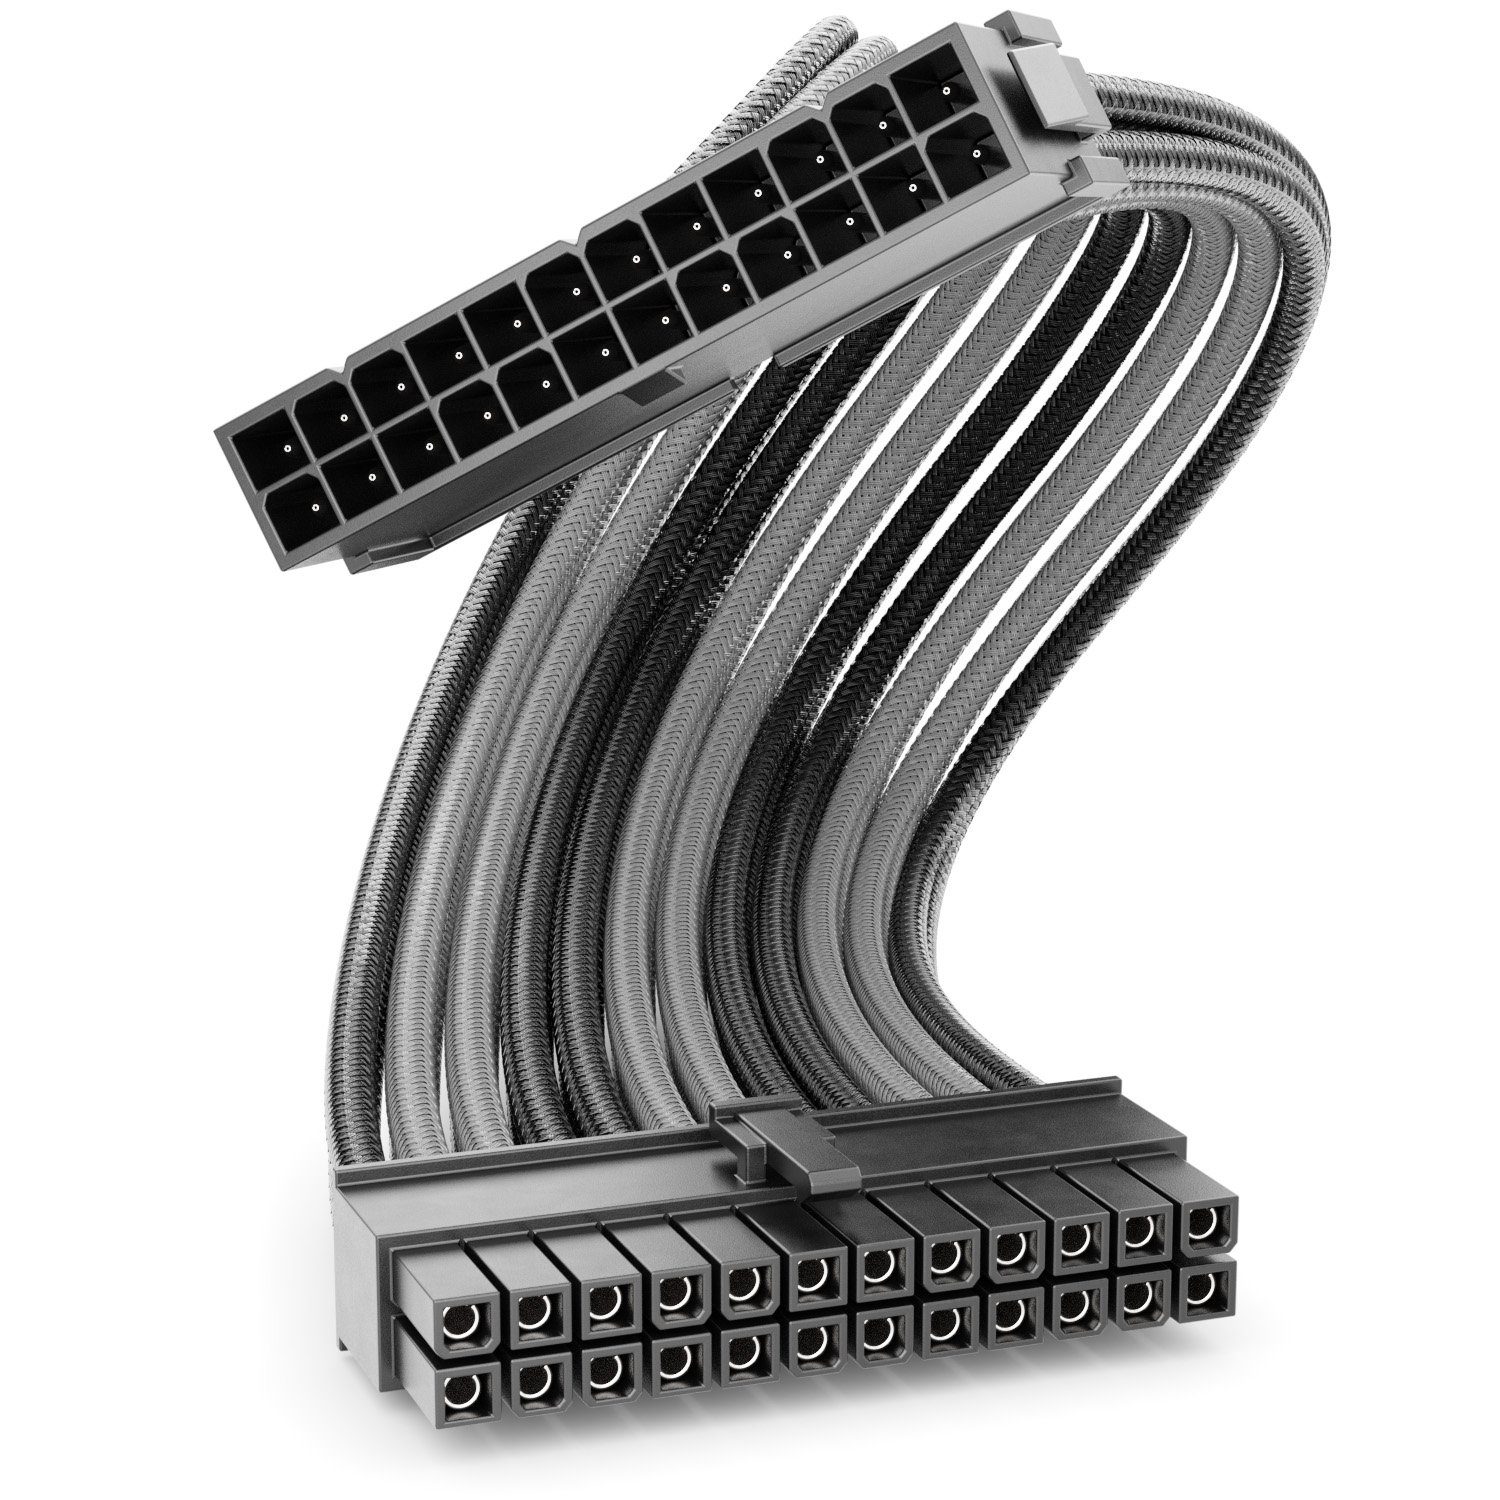 deleyCON deleyCON 24-Pin ATX Netzteil Kabel Intern 30cm 18 AWG PSU Mainboard Computer-Kabel